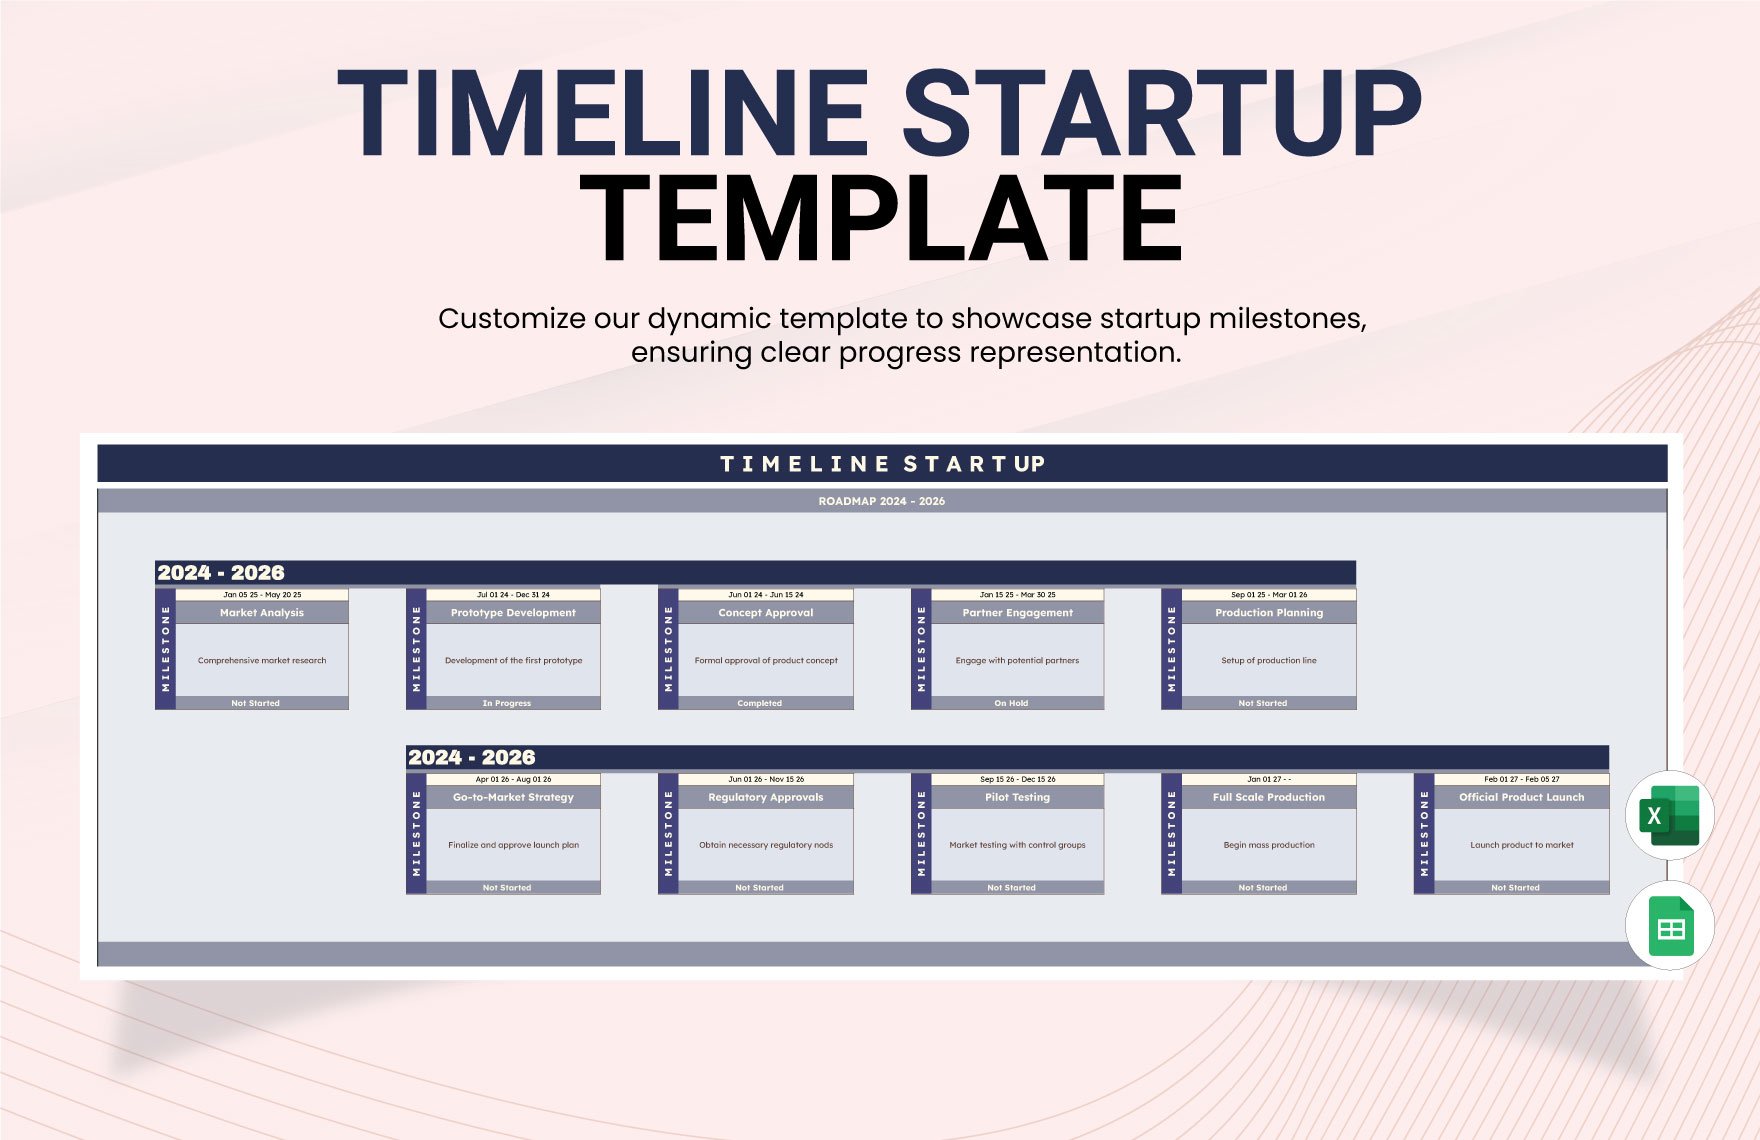 Timeline Startup Template in Excel, Google Sheets